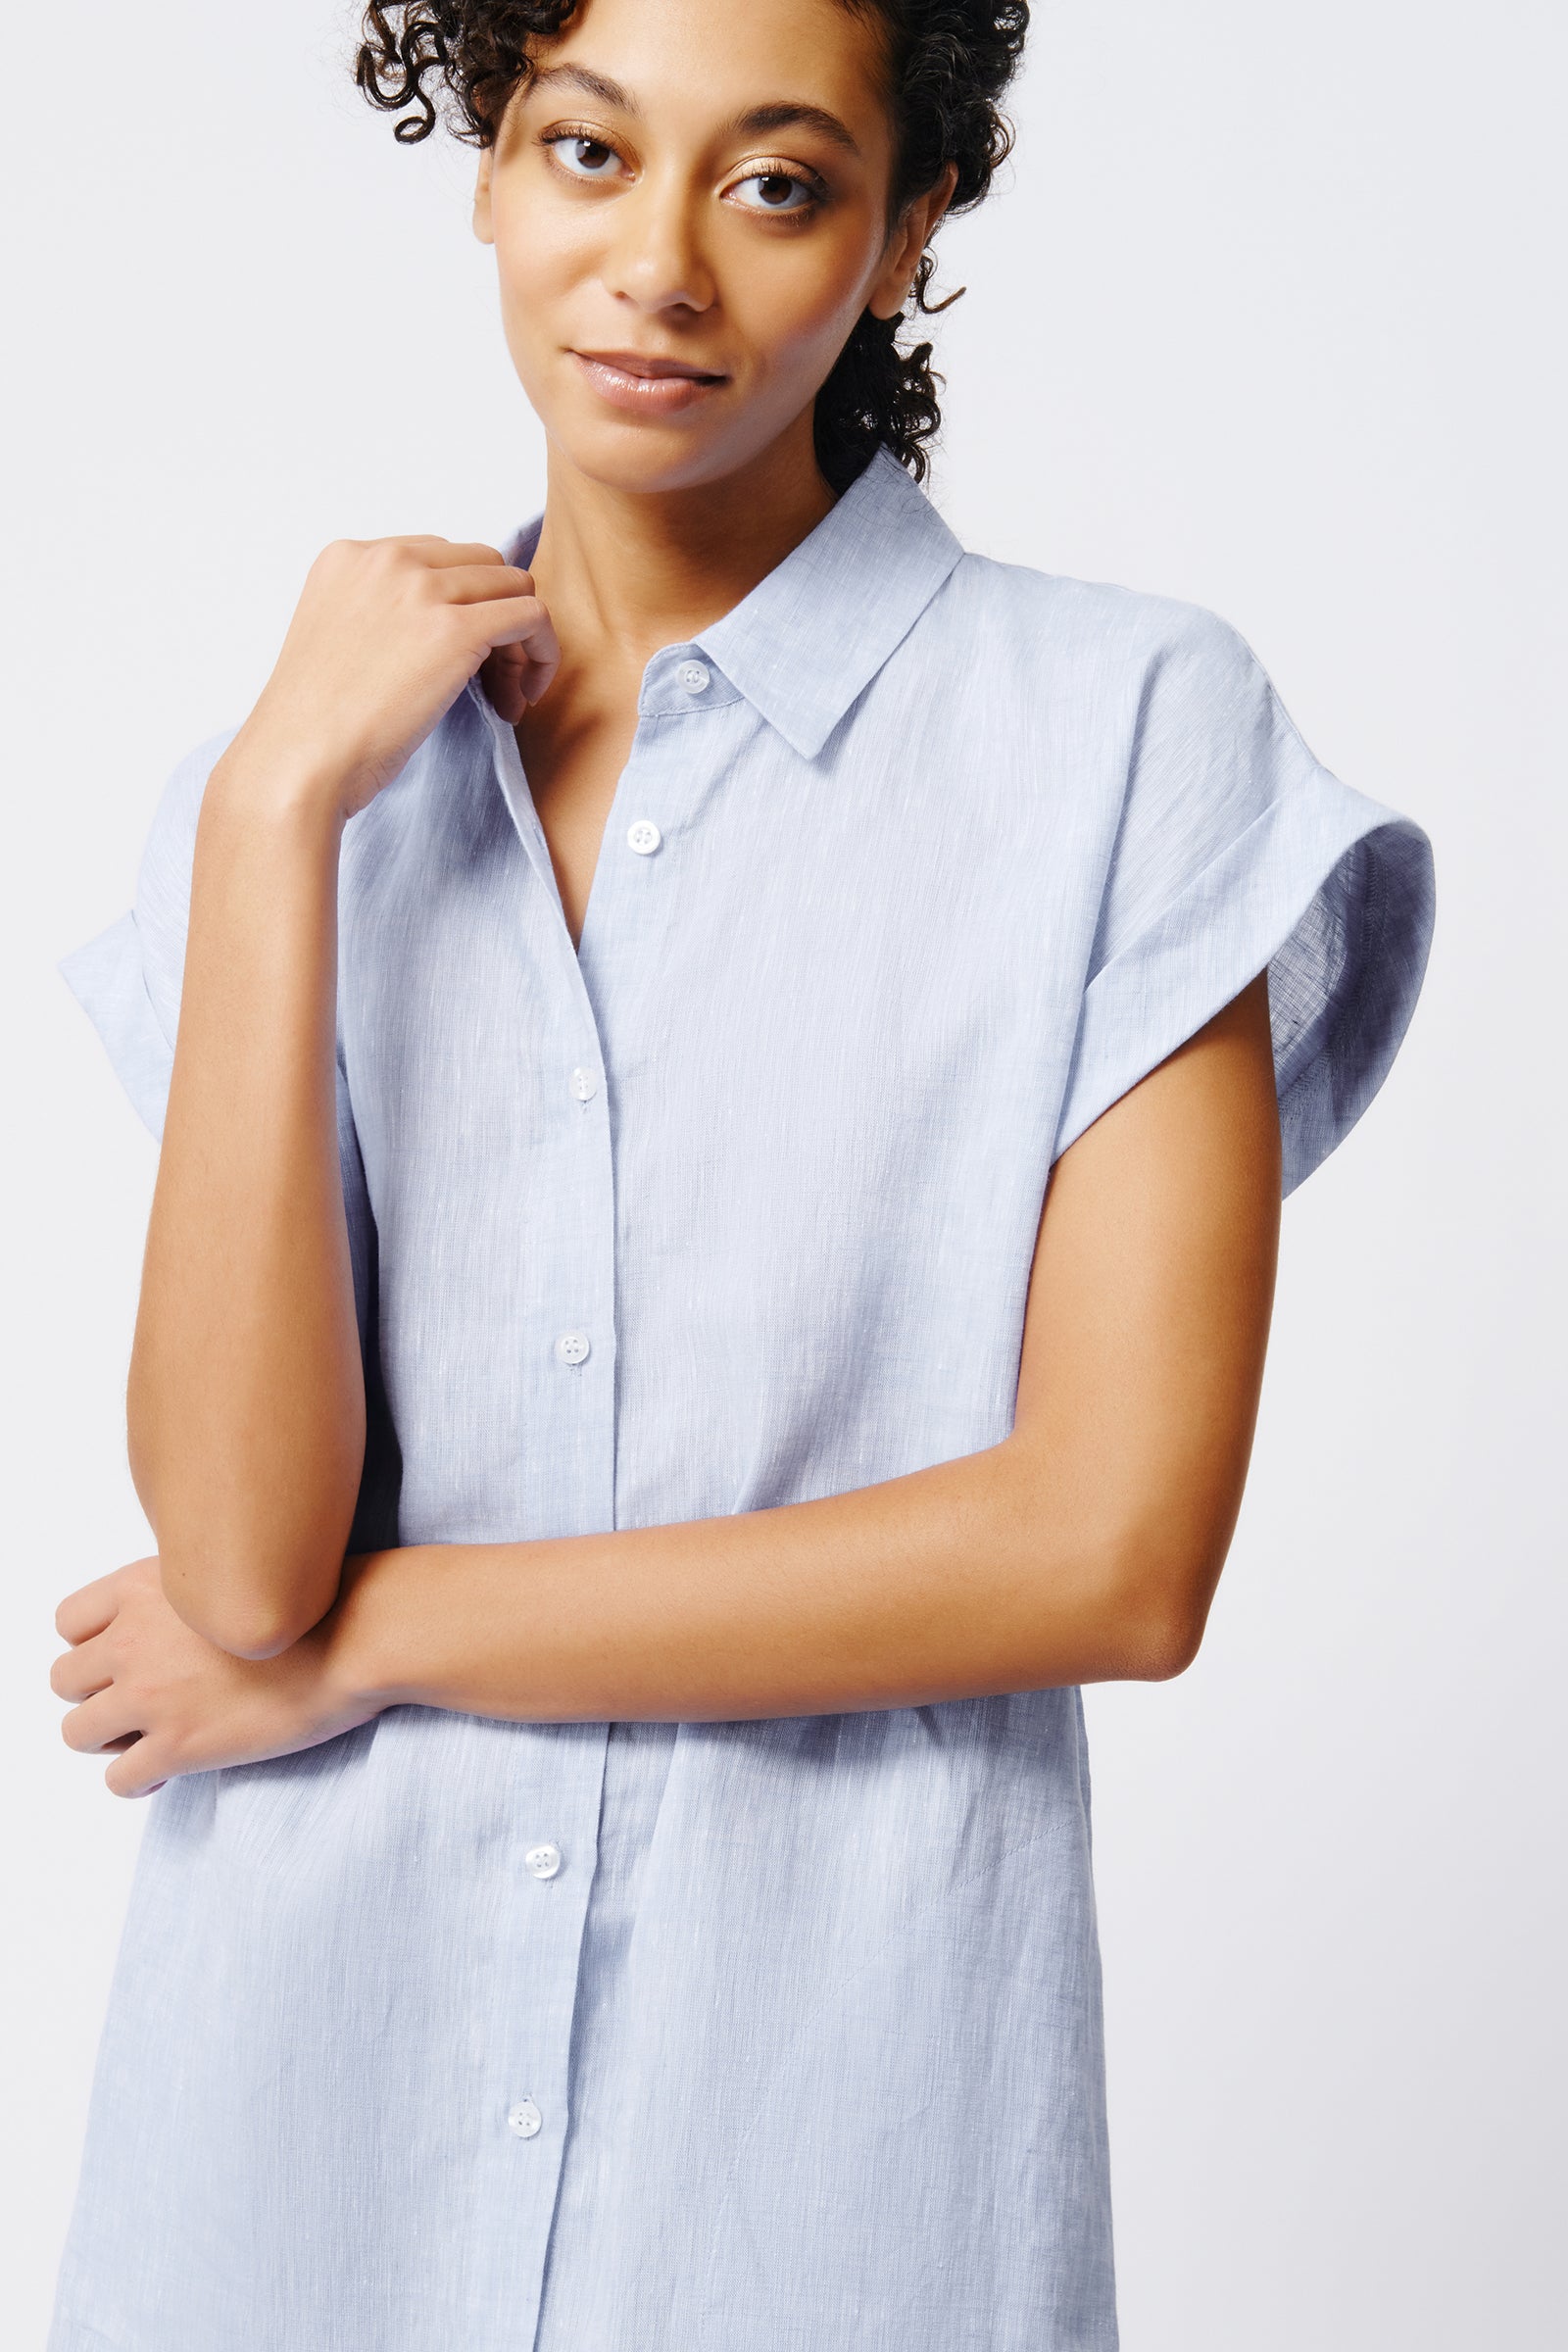 Kal Rieman Hedy Cuffed Cap Sleeve Shirt Dress in Blue Linen on Model Front View Crop 2